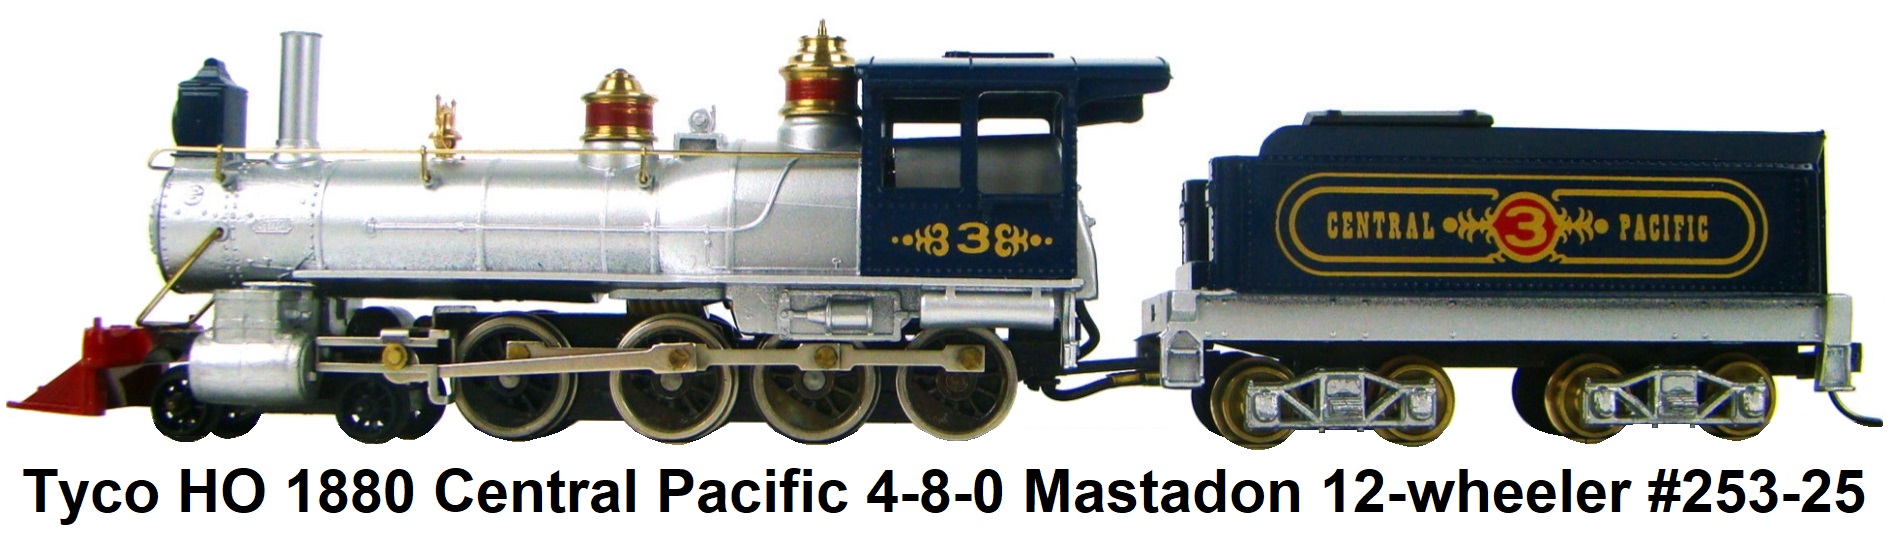 Tyco HO #253-25 1880 Central Pacific 4-8-0 Mastodon Twelve Wheeler Locomotive circa 1976